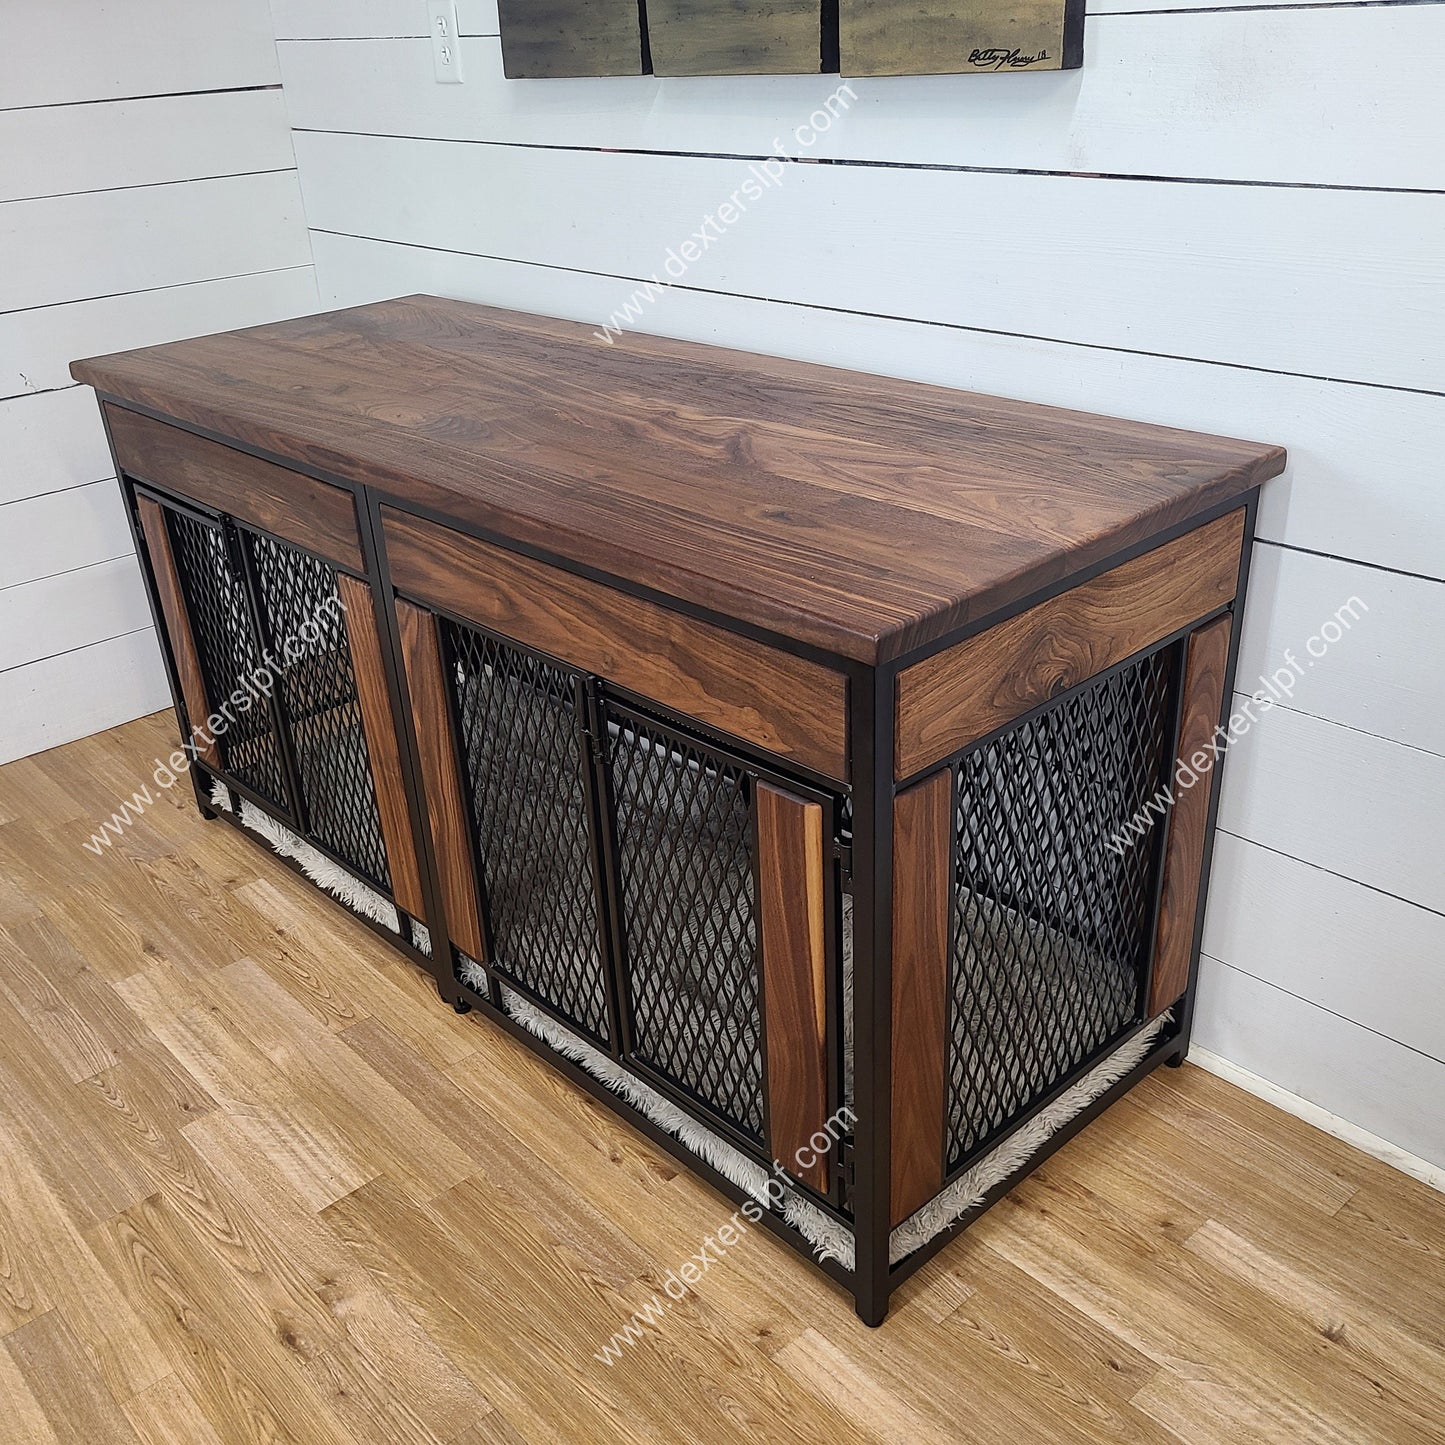 Raven Medium Double Dog Crate Furniture, Dog Kennel Furniture, Double Dog Crate, Dog Crate Table, Modern Dog Crate,